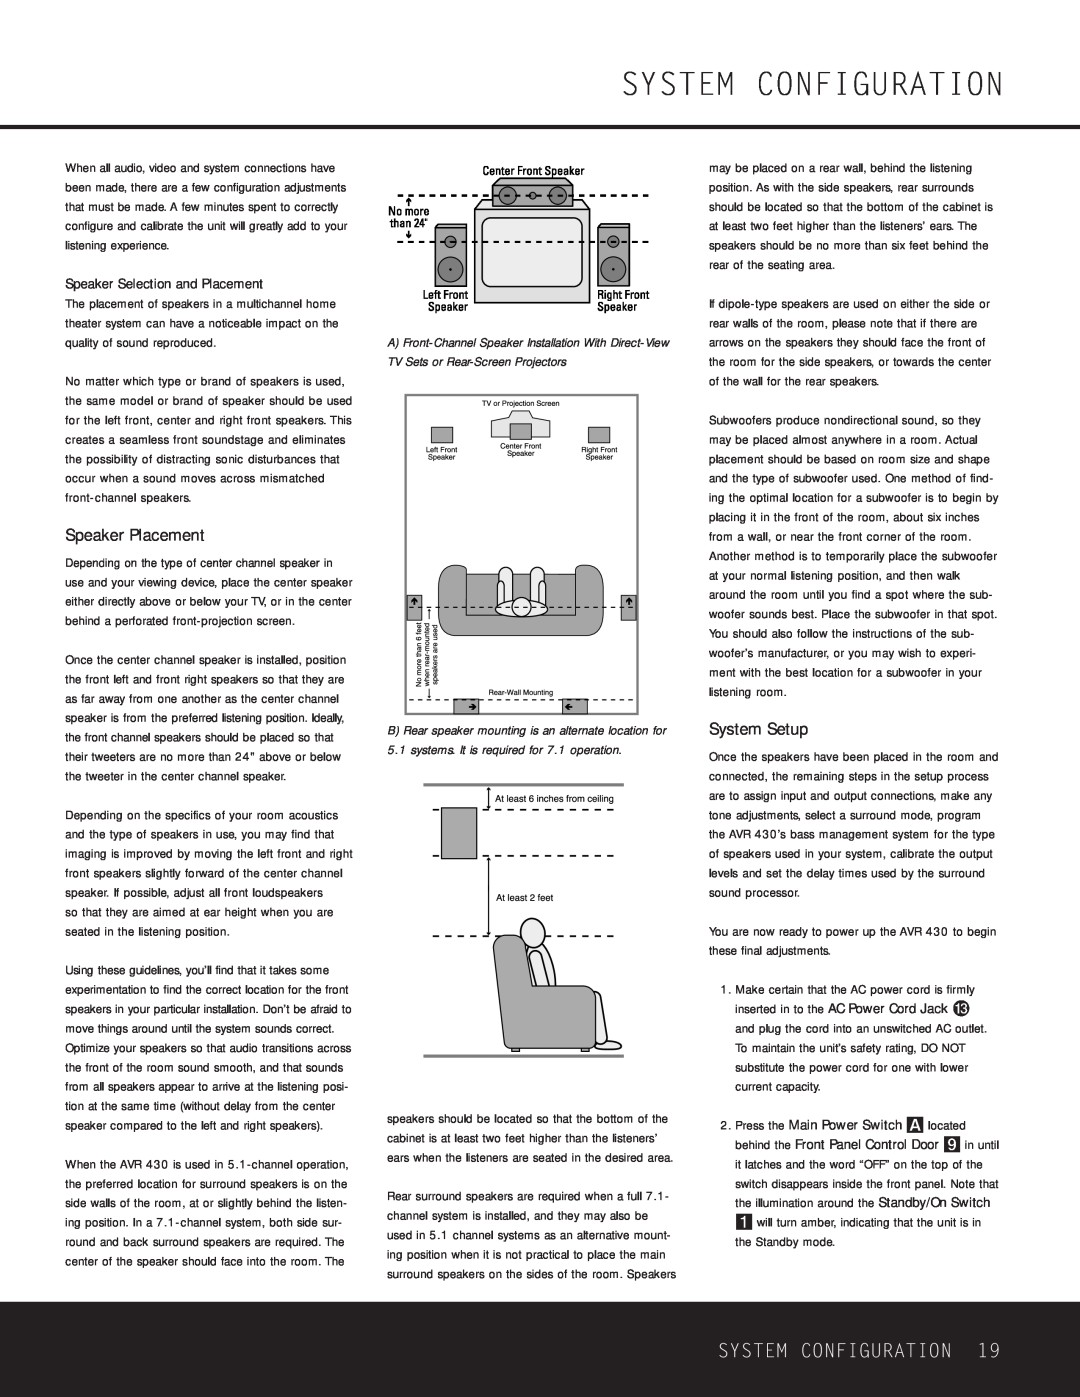 Harman-Kardon AVR 430 owner manual System Configuration, Speaker Placement, System Setup, Speaker Selection and Placement 